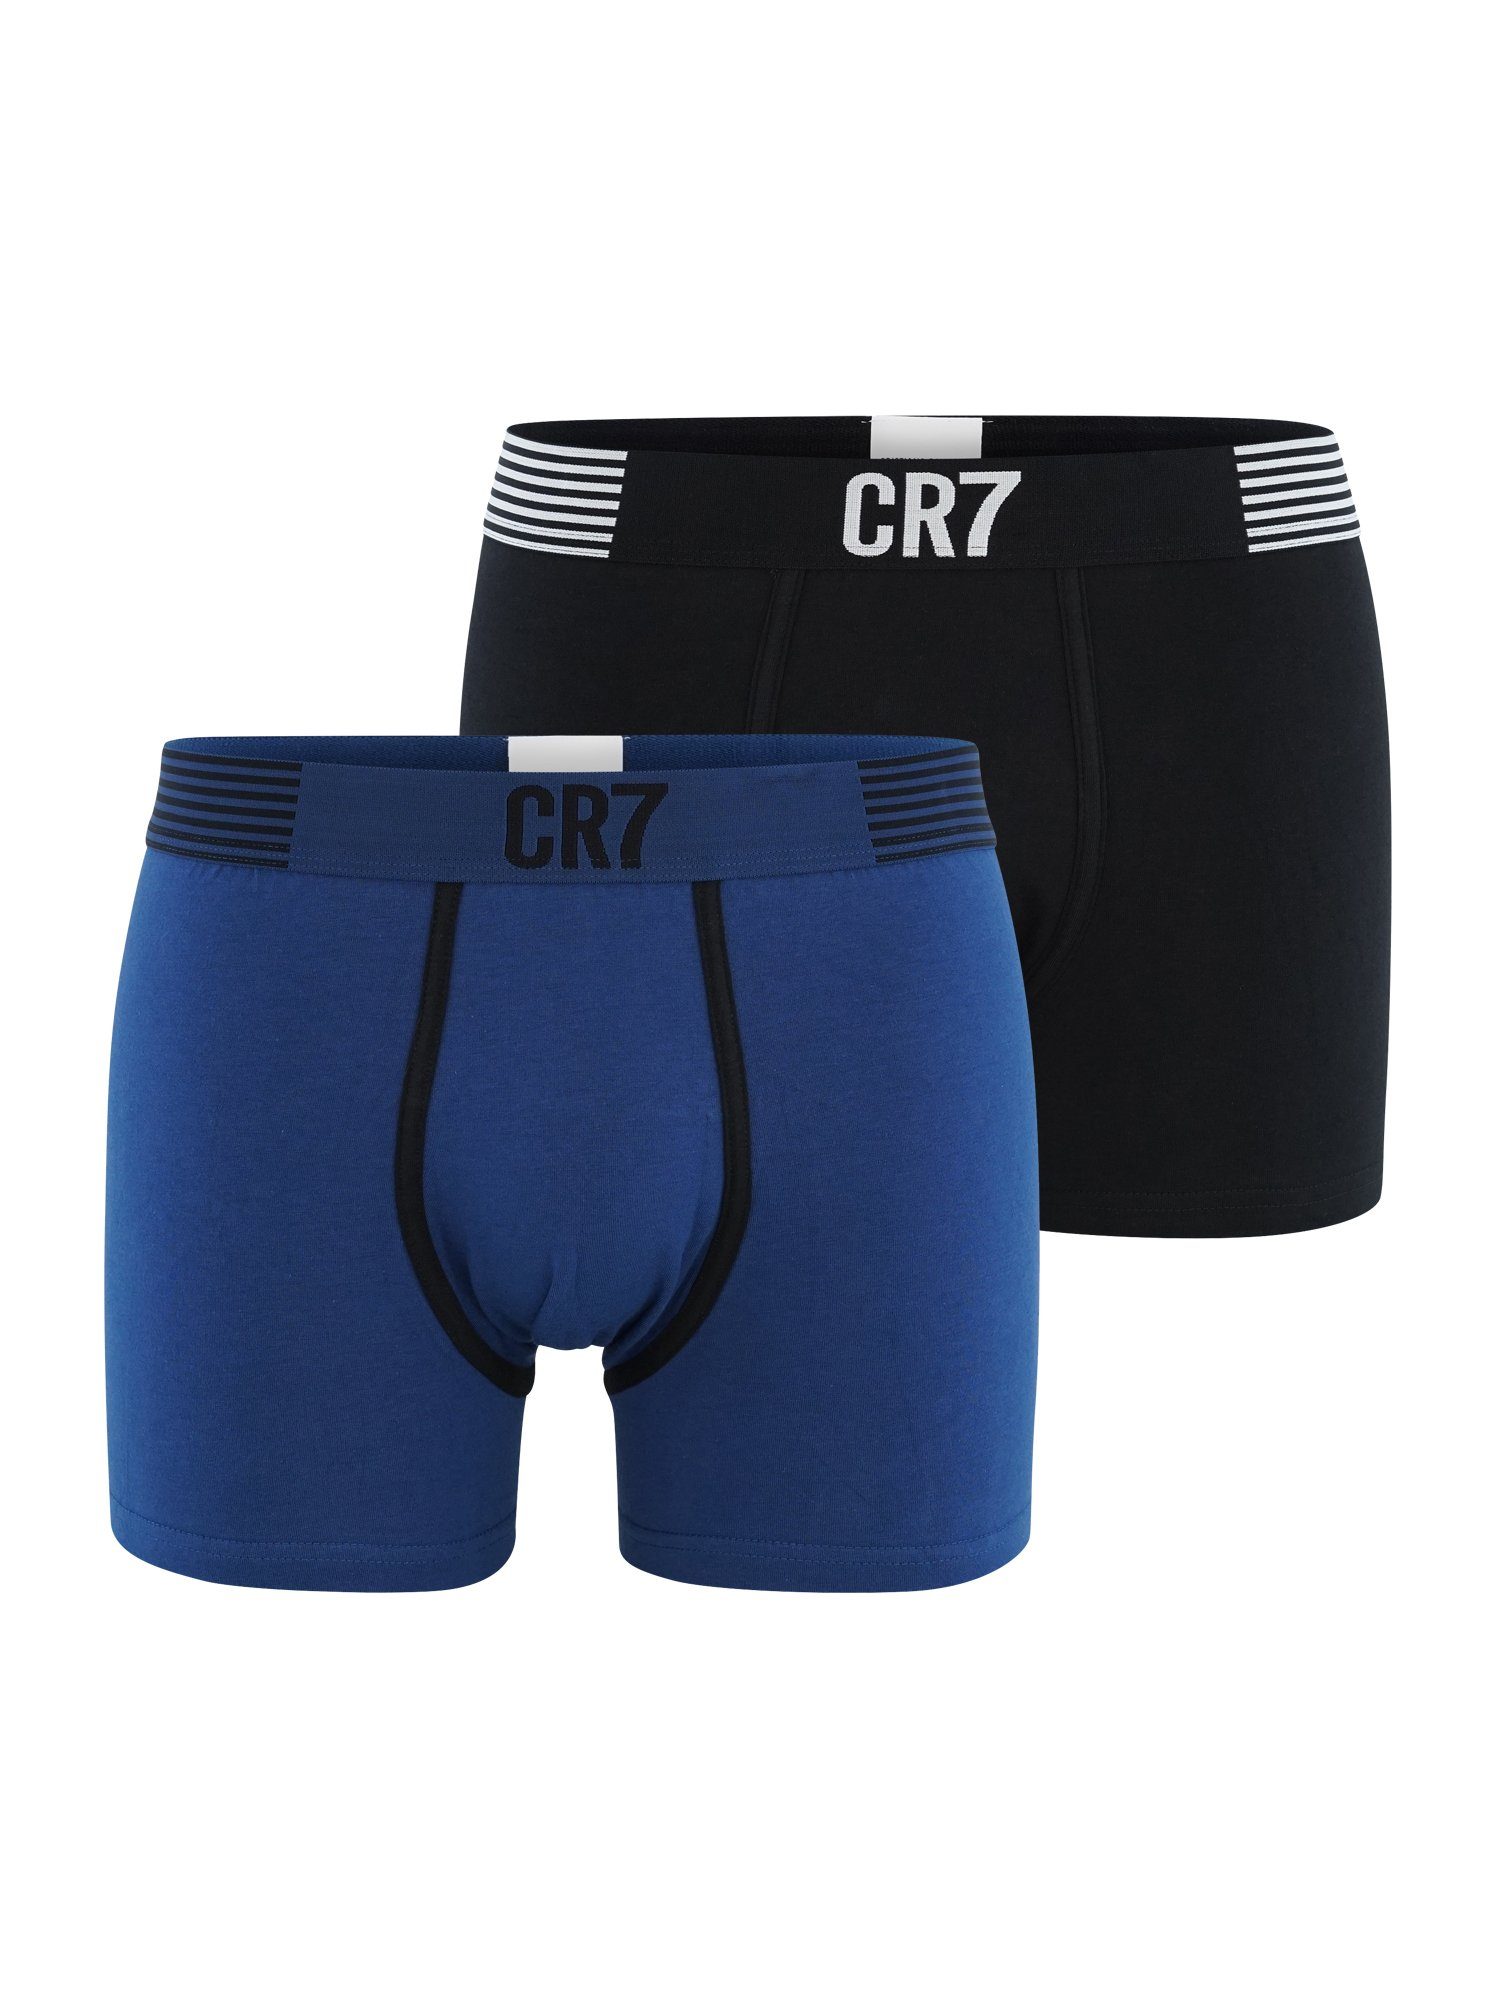 CR7 Retro Pants FASHION (2-St) Blau/Schwarz (544)